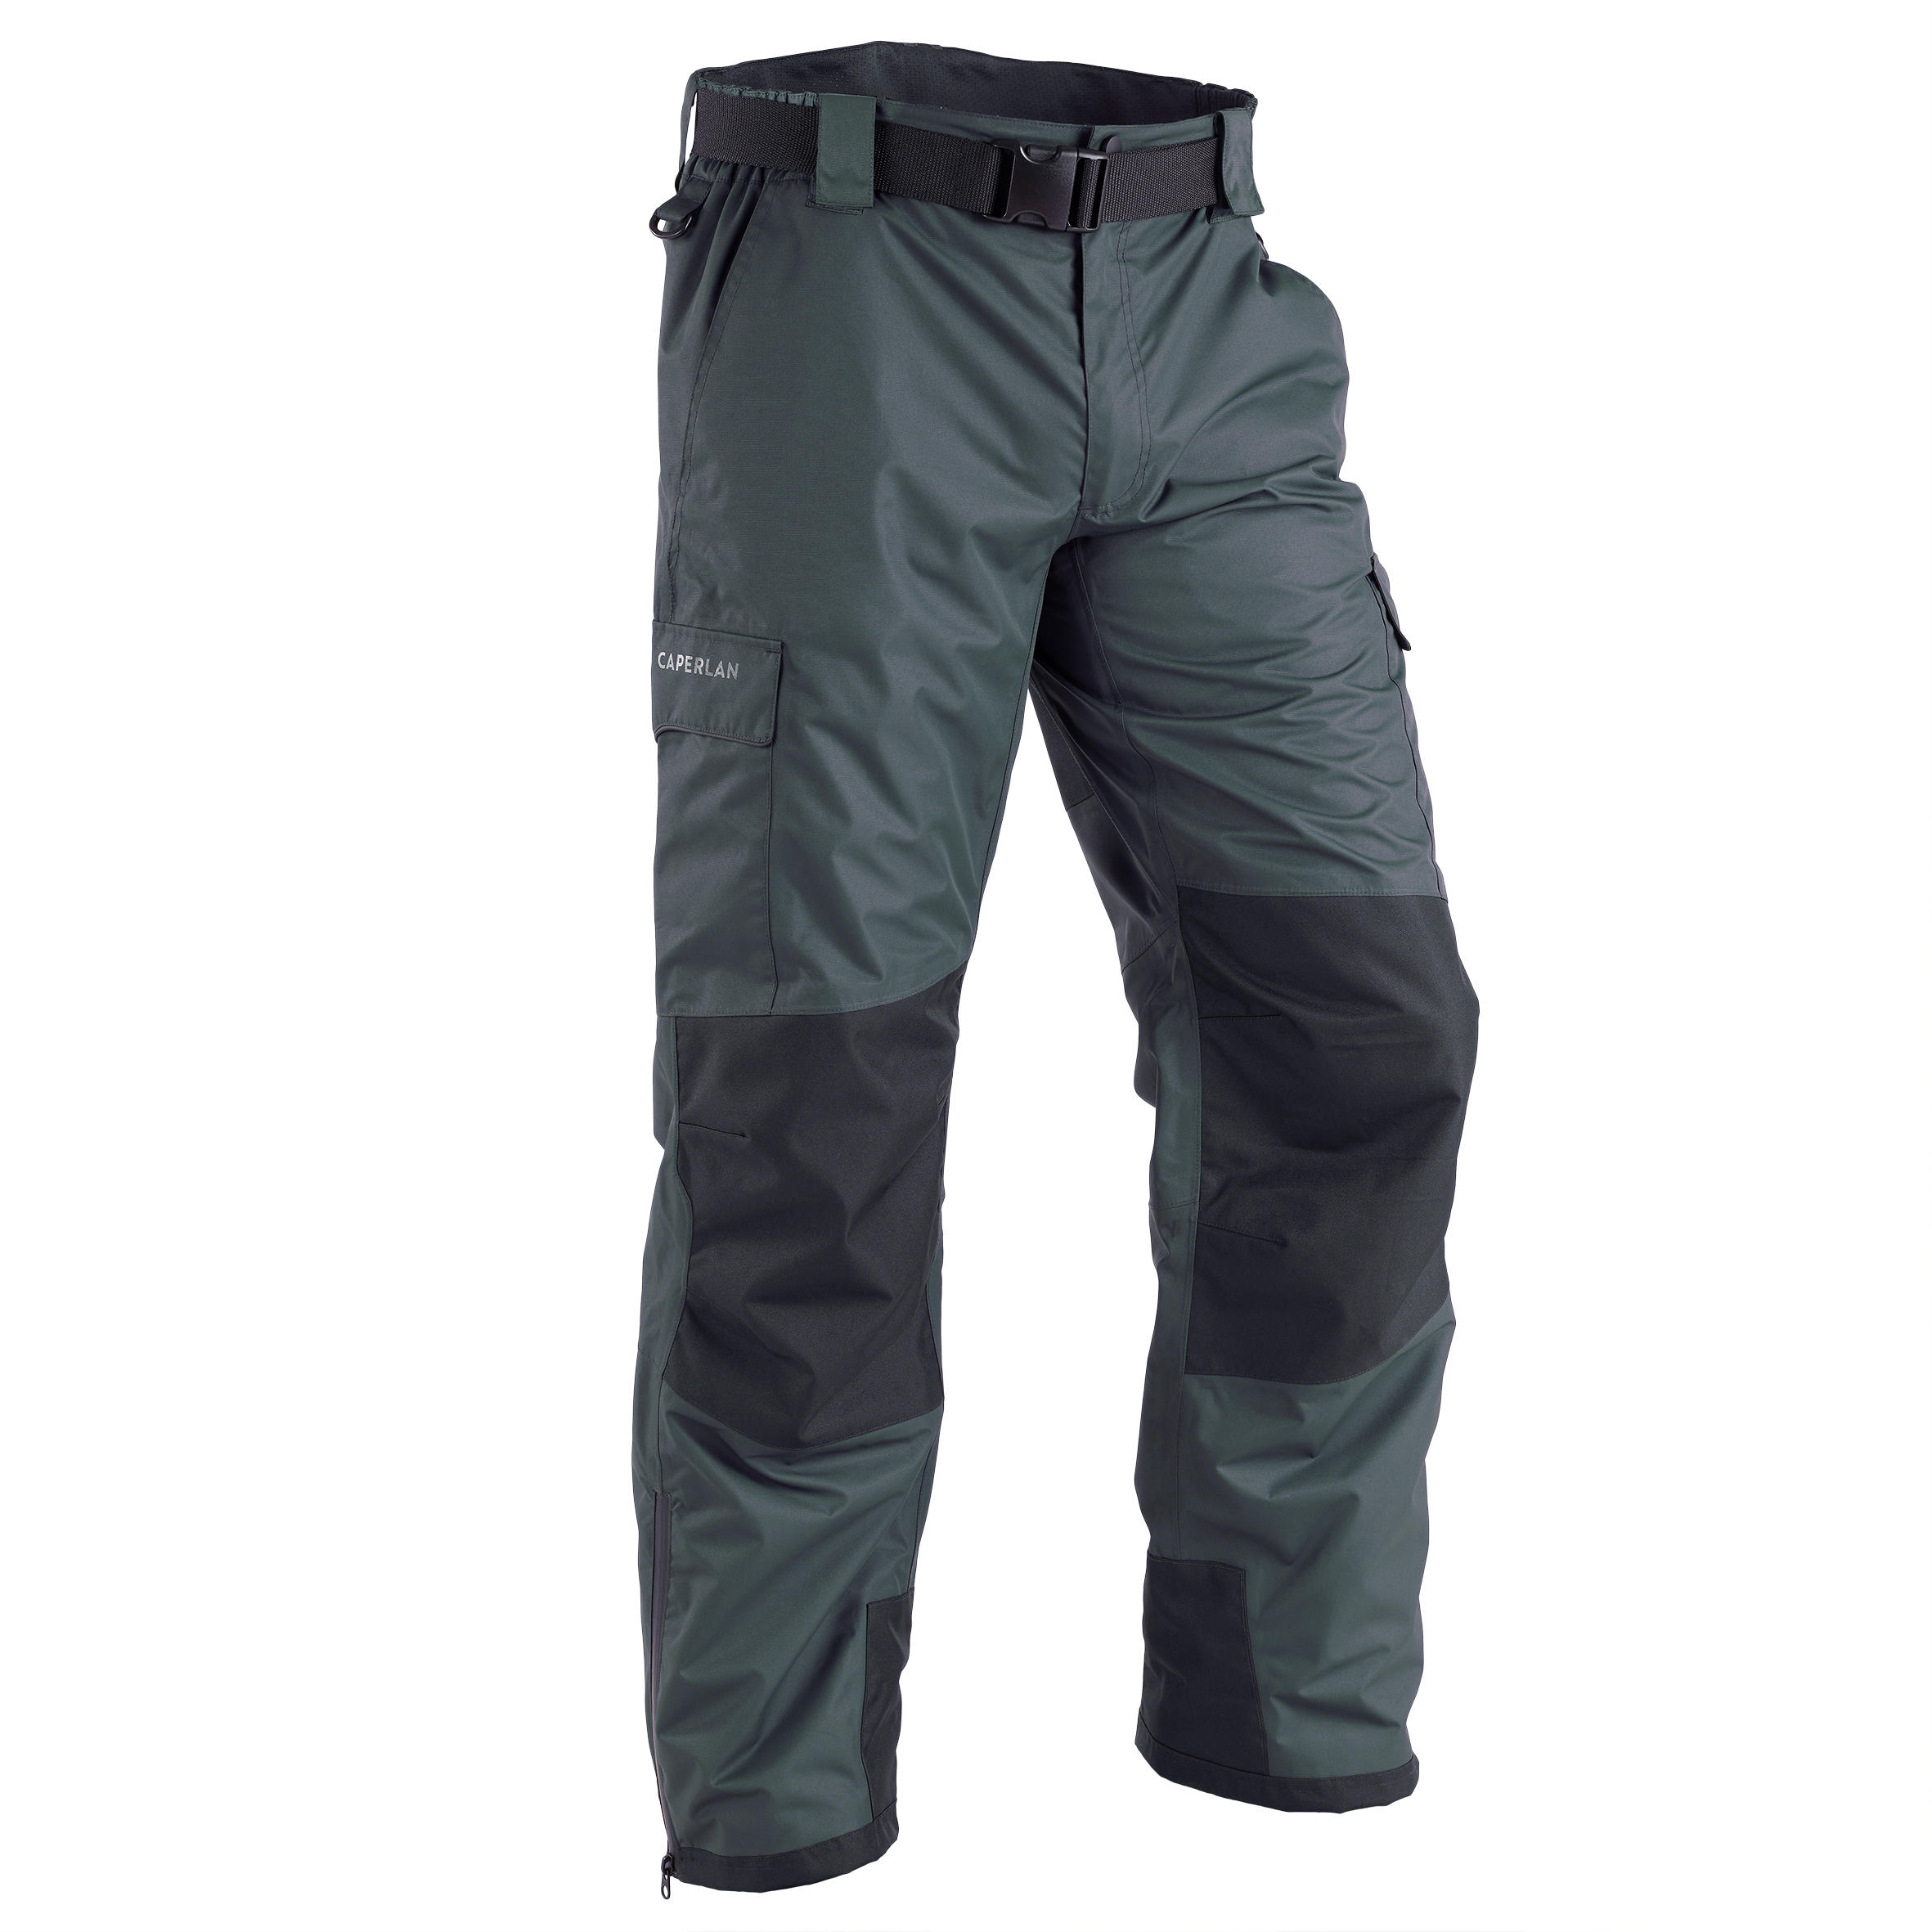 Warm Waterproof Trousers - Camouflage Brown - Decathlon